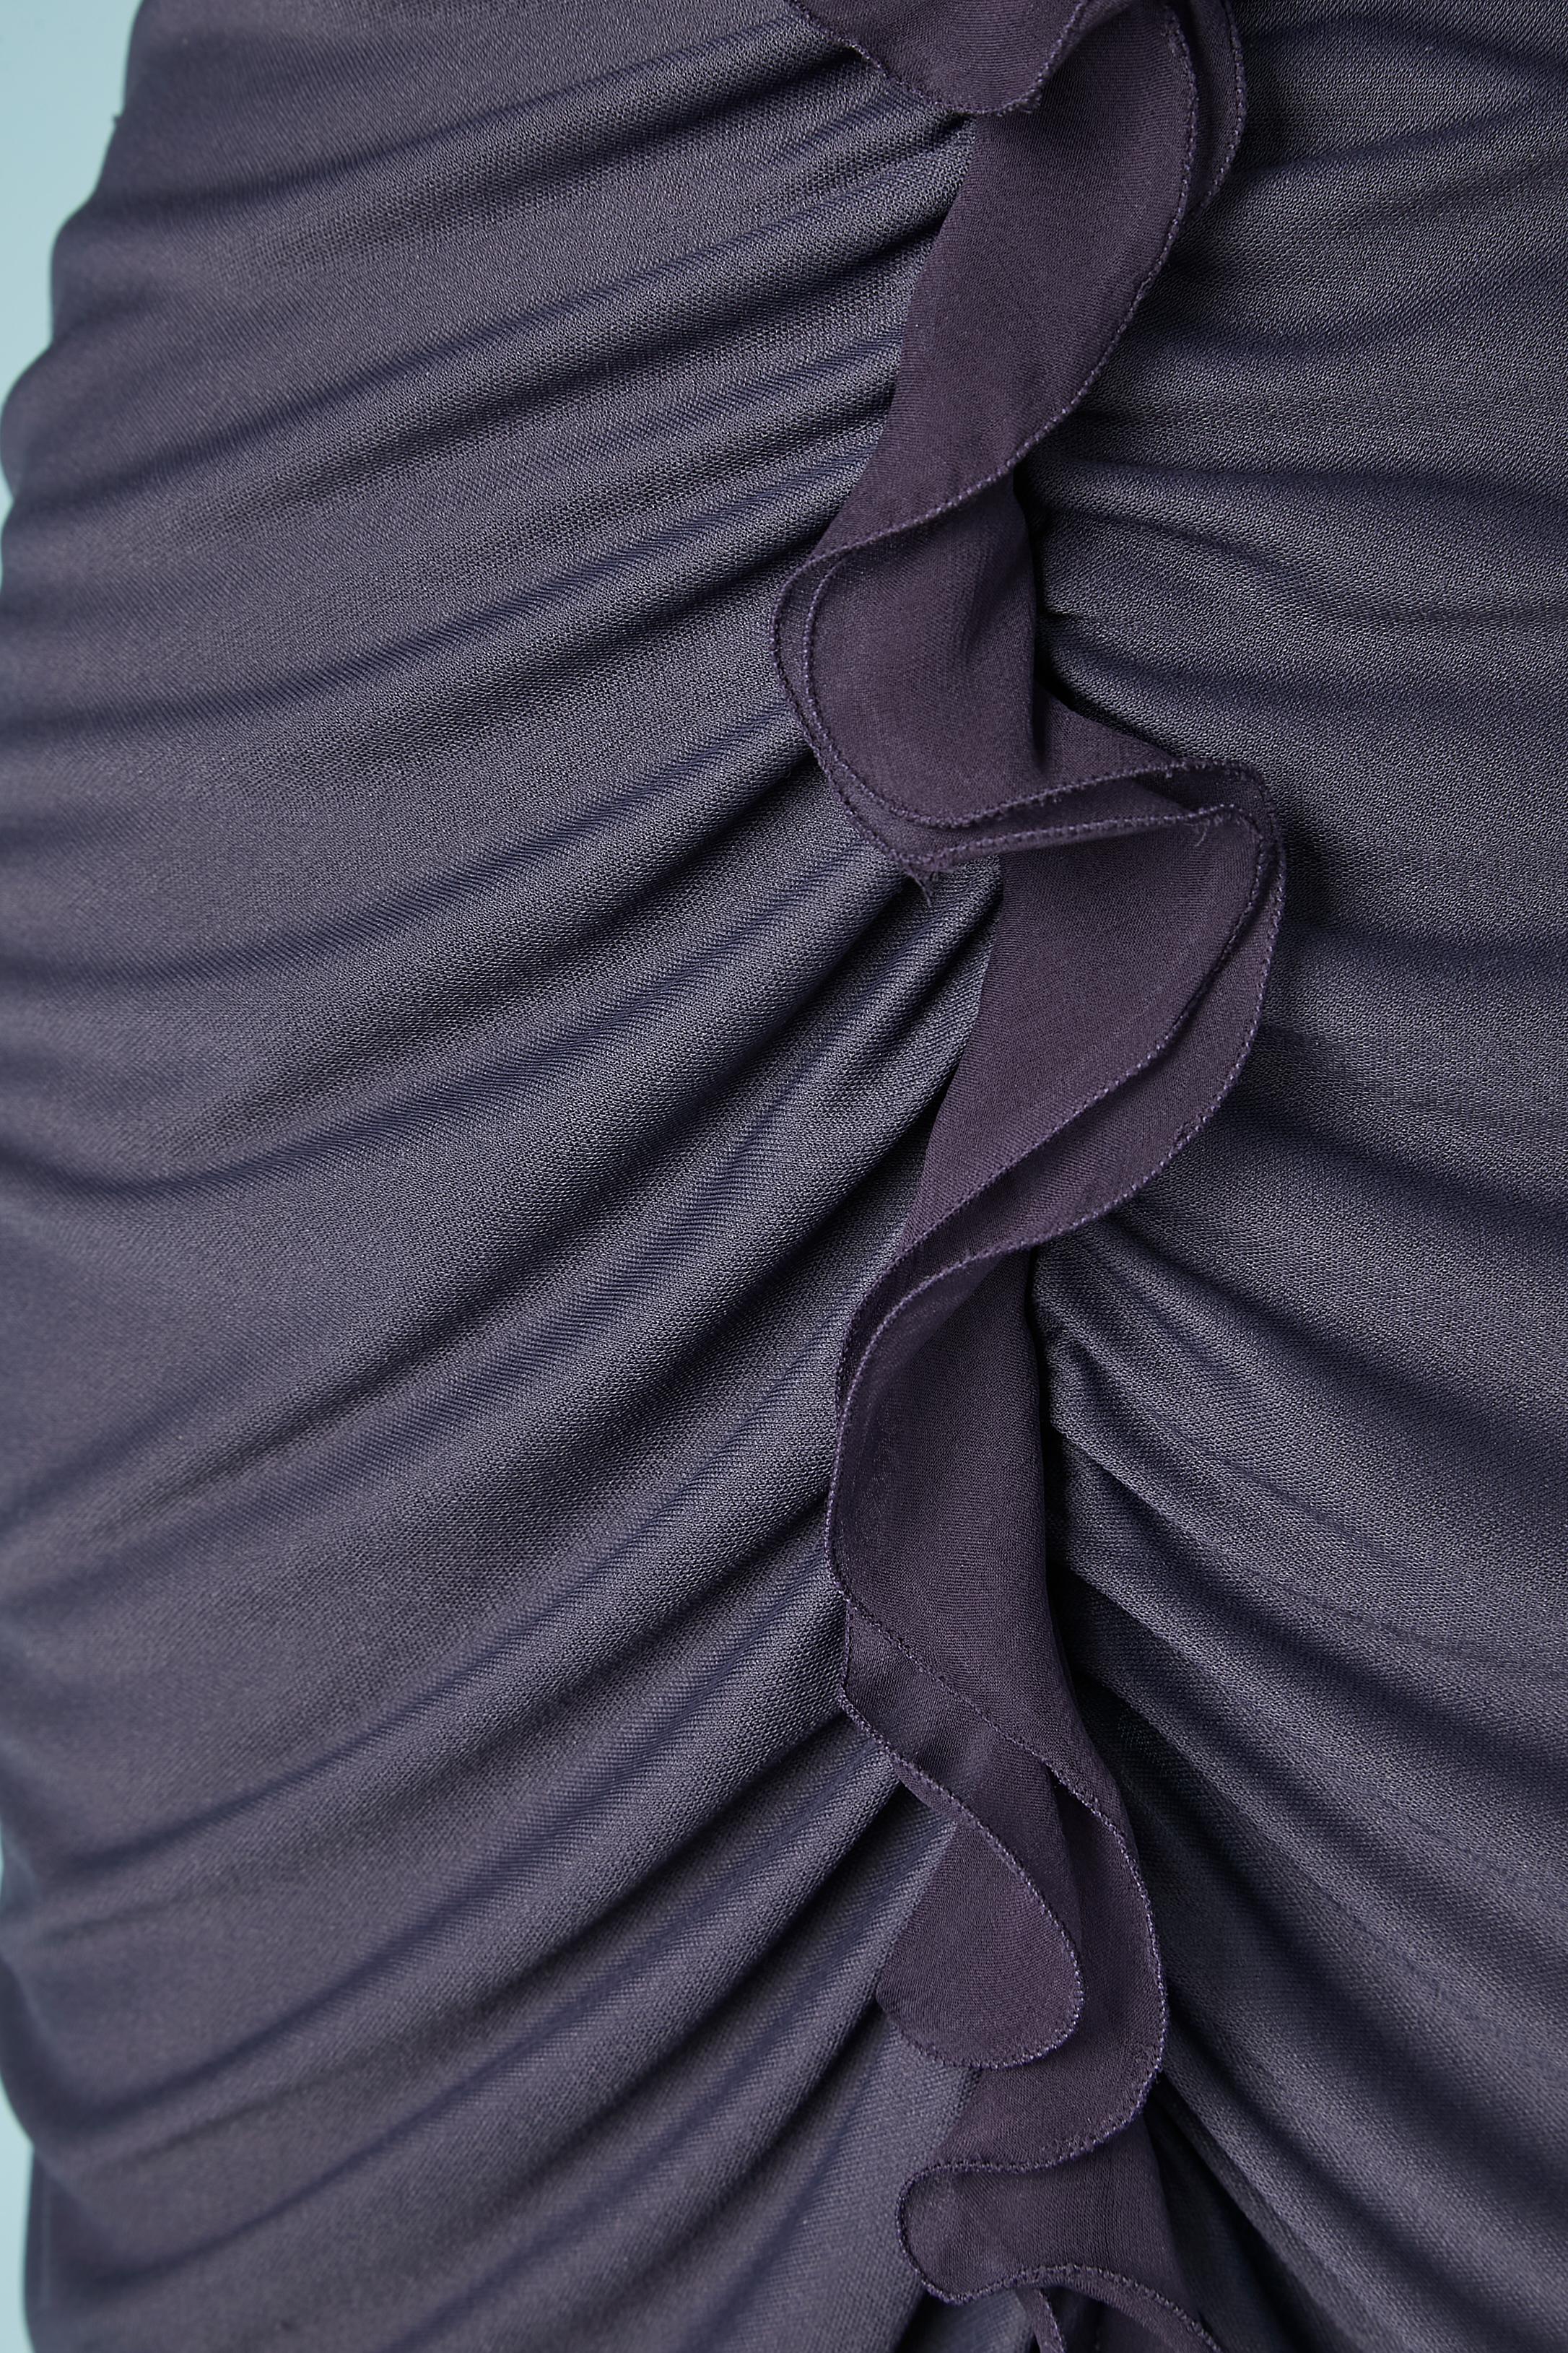 Black Deep purple rayon jersey drape cocktail dress with ruffles Emanuel Ungaro For Sale